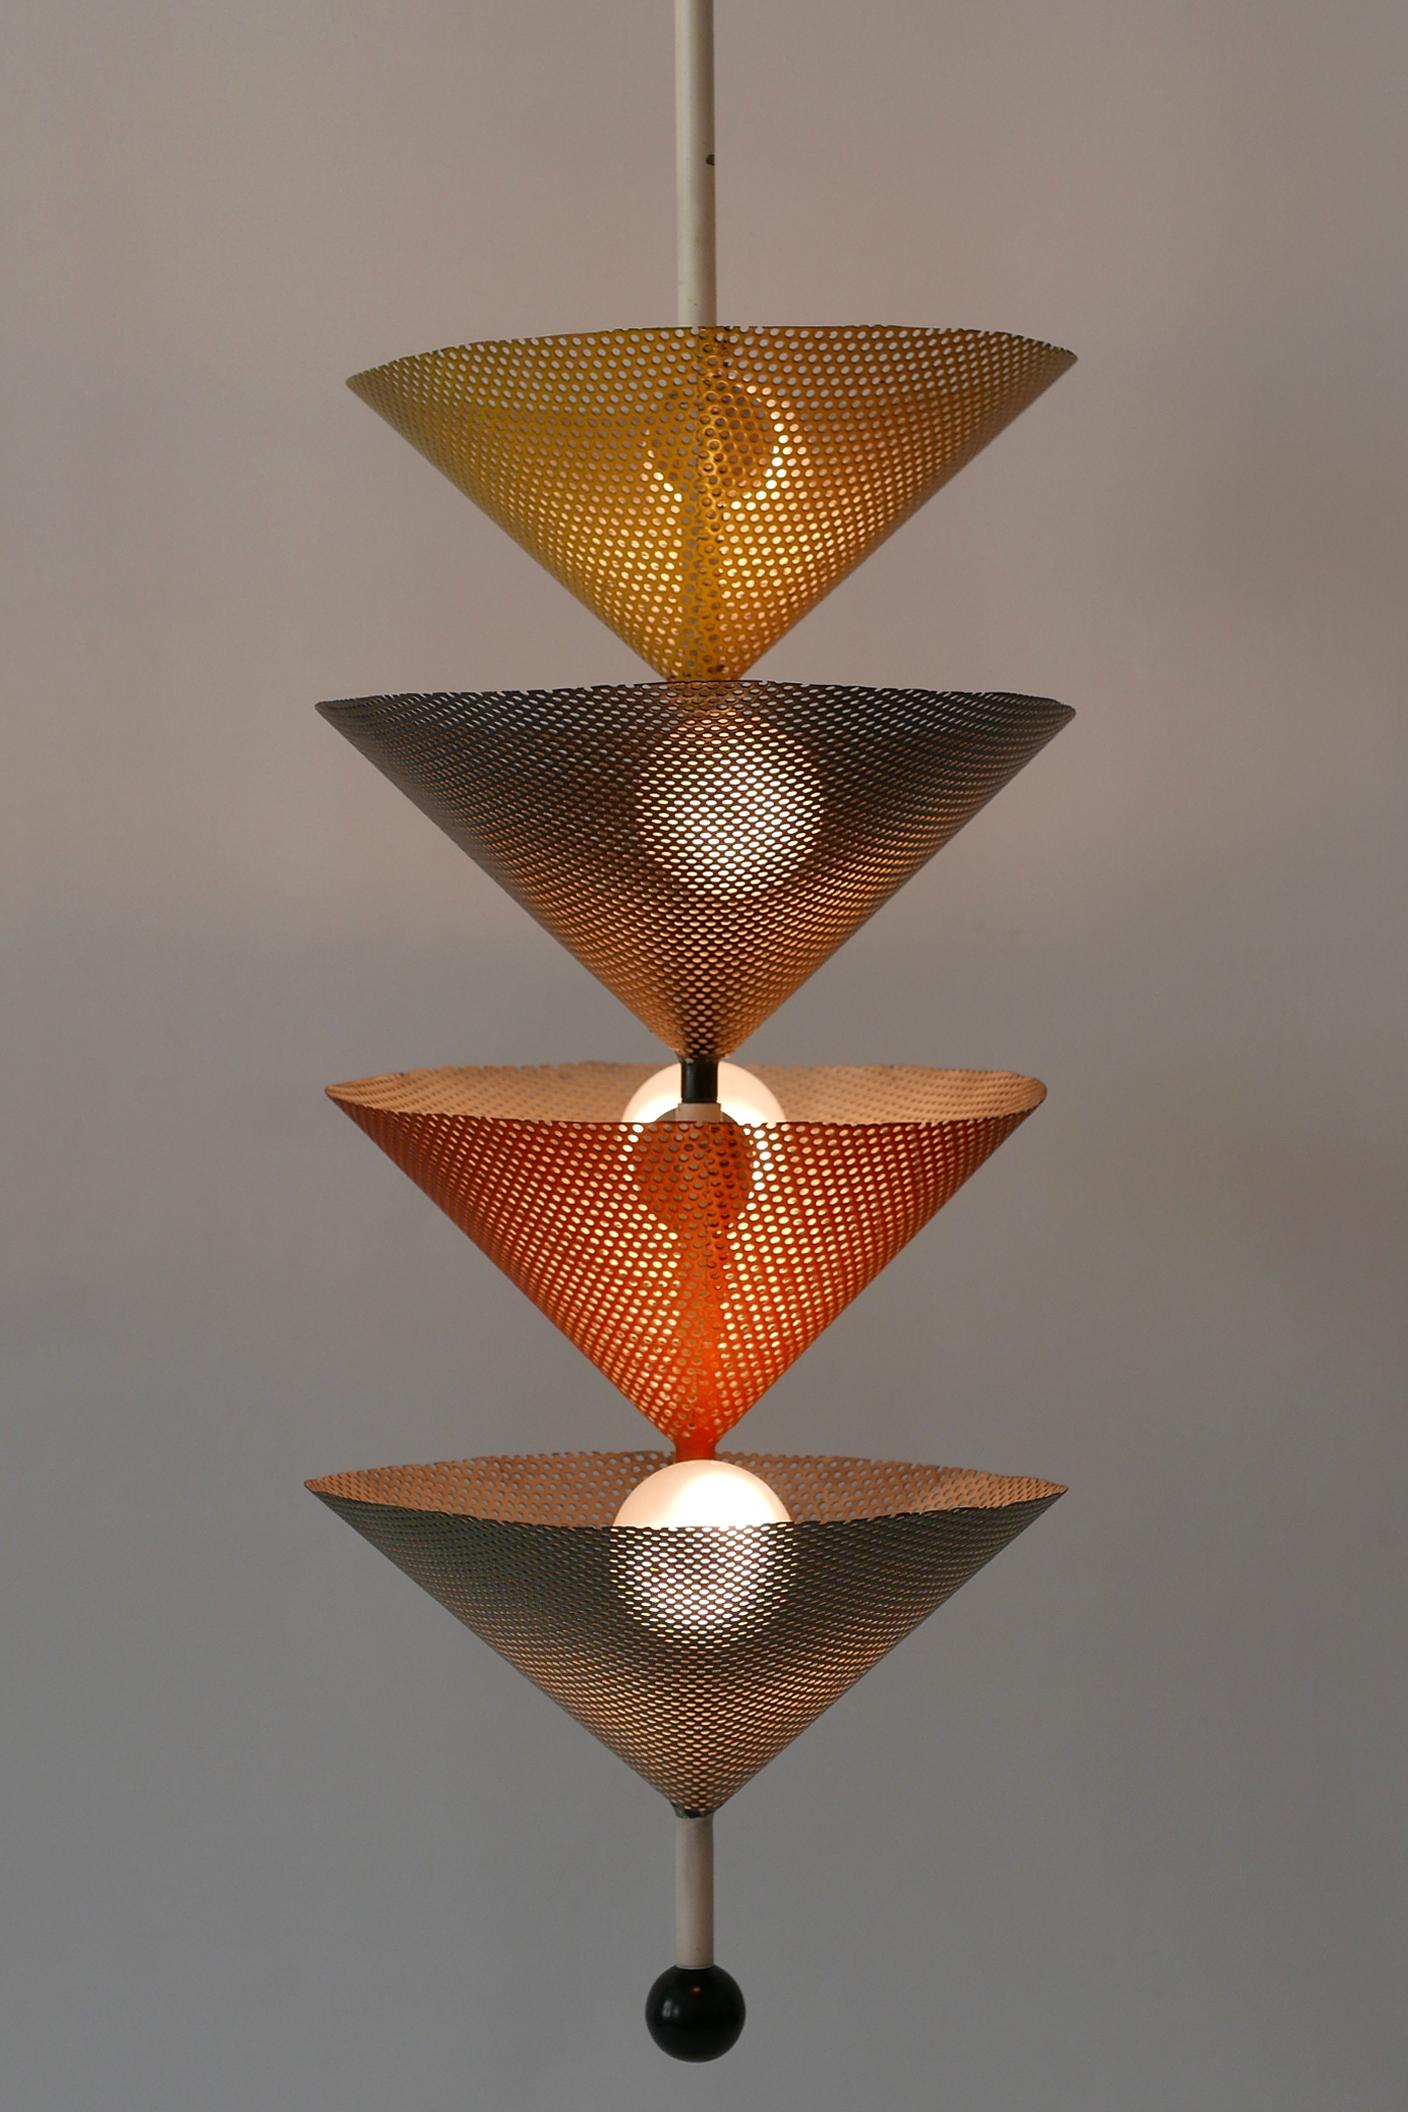 Rare Mid-Century Modern Chandelier or Pendant Lamp by Mathieu Matégot 1950s 7